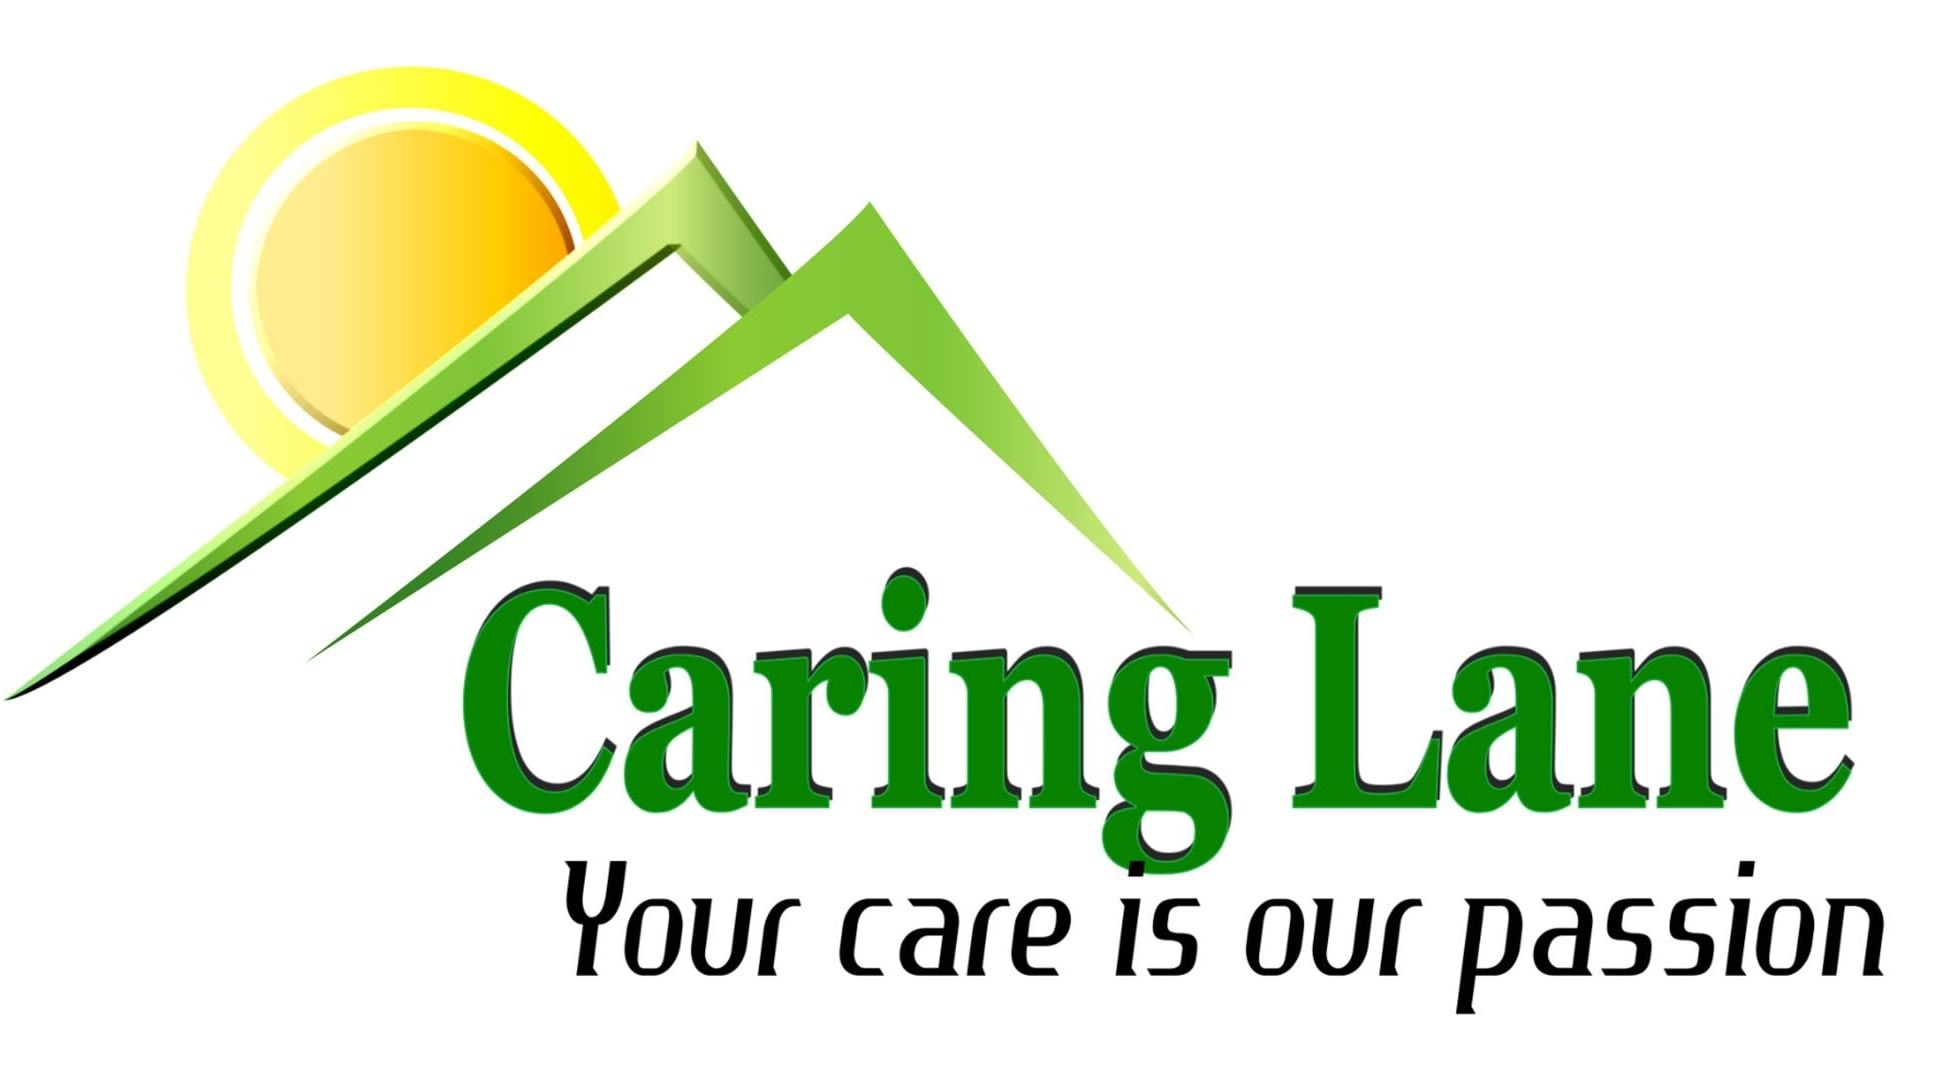 Caring Lane Limited